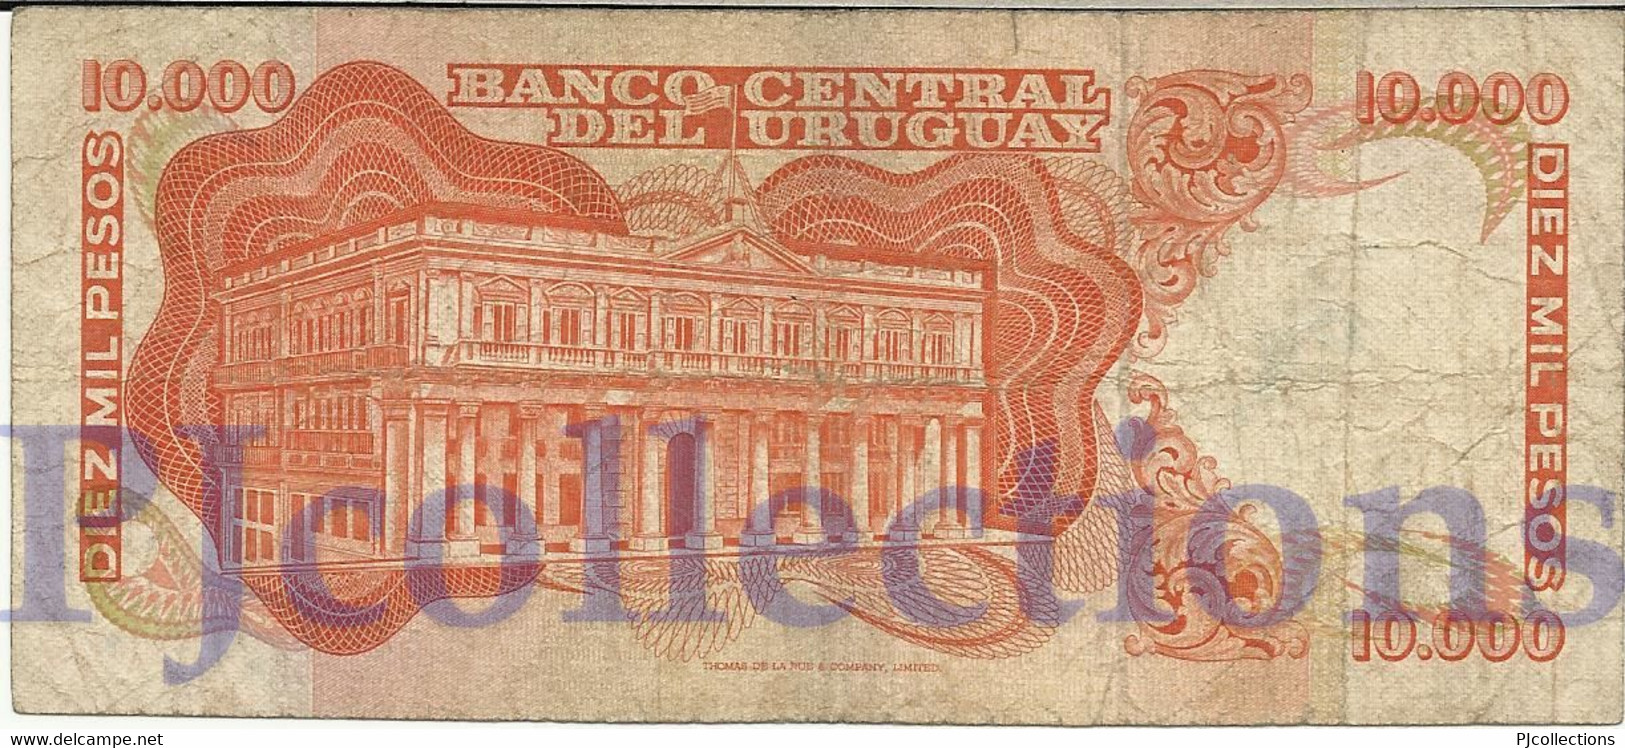 URUGUAY 10000 PESOS 1974 PICK 53b FINE - Uruguay